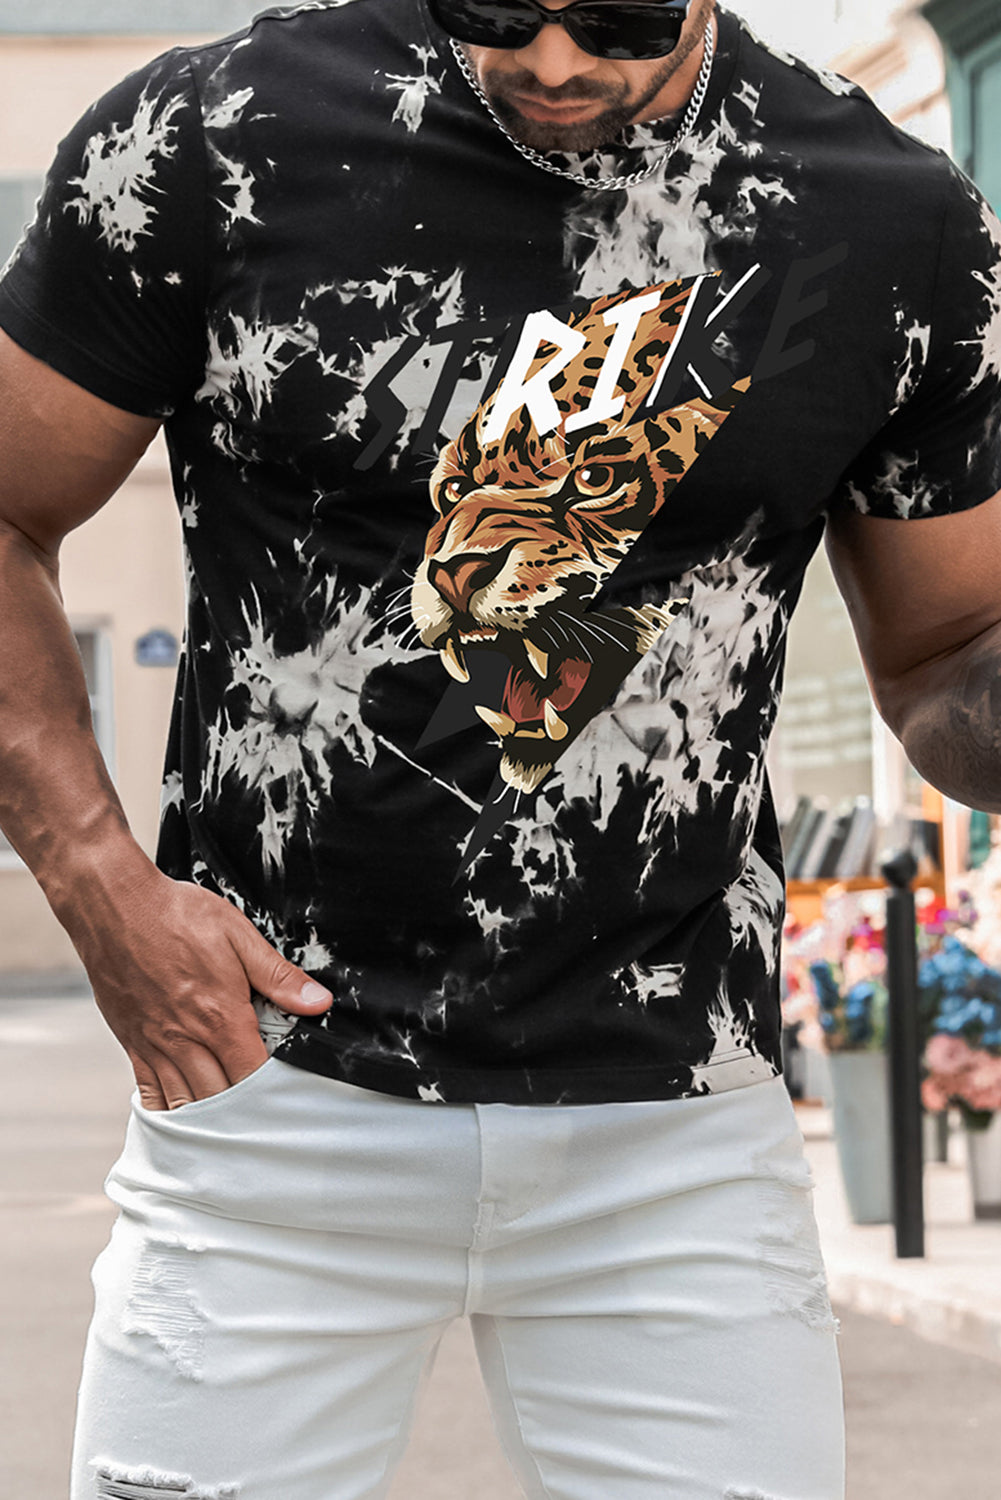 Black STRIKE Tiger Head Tie Dyed Print Men's Graphic Tee Black 100%Cotton Men's Tops JT's Designer Fashion